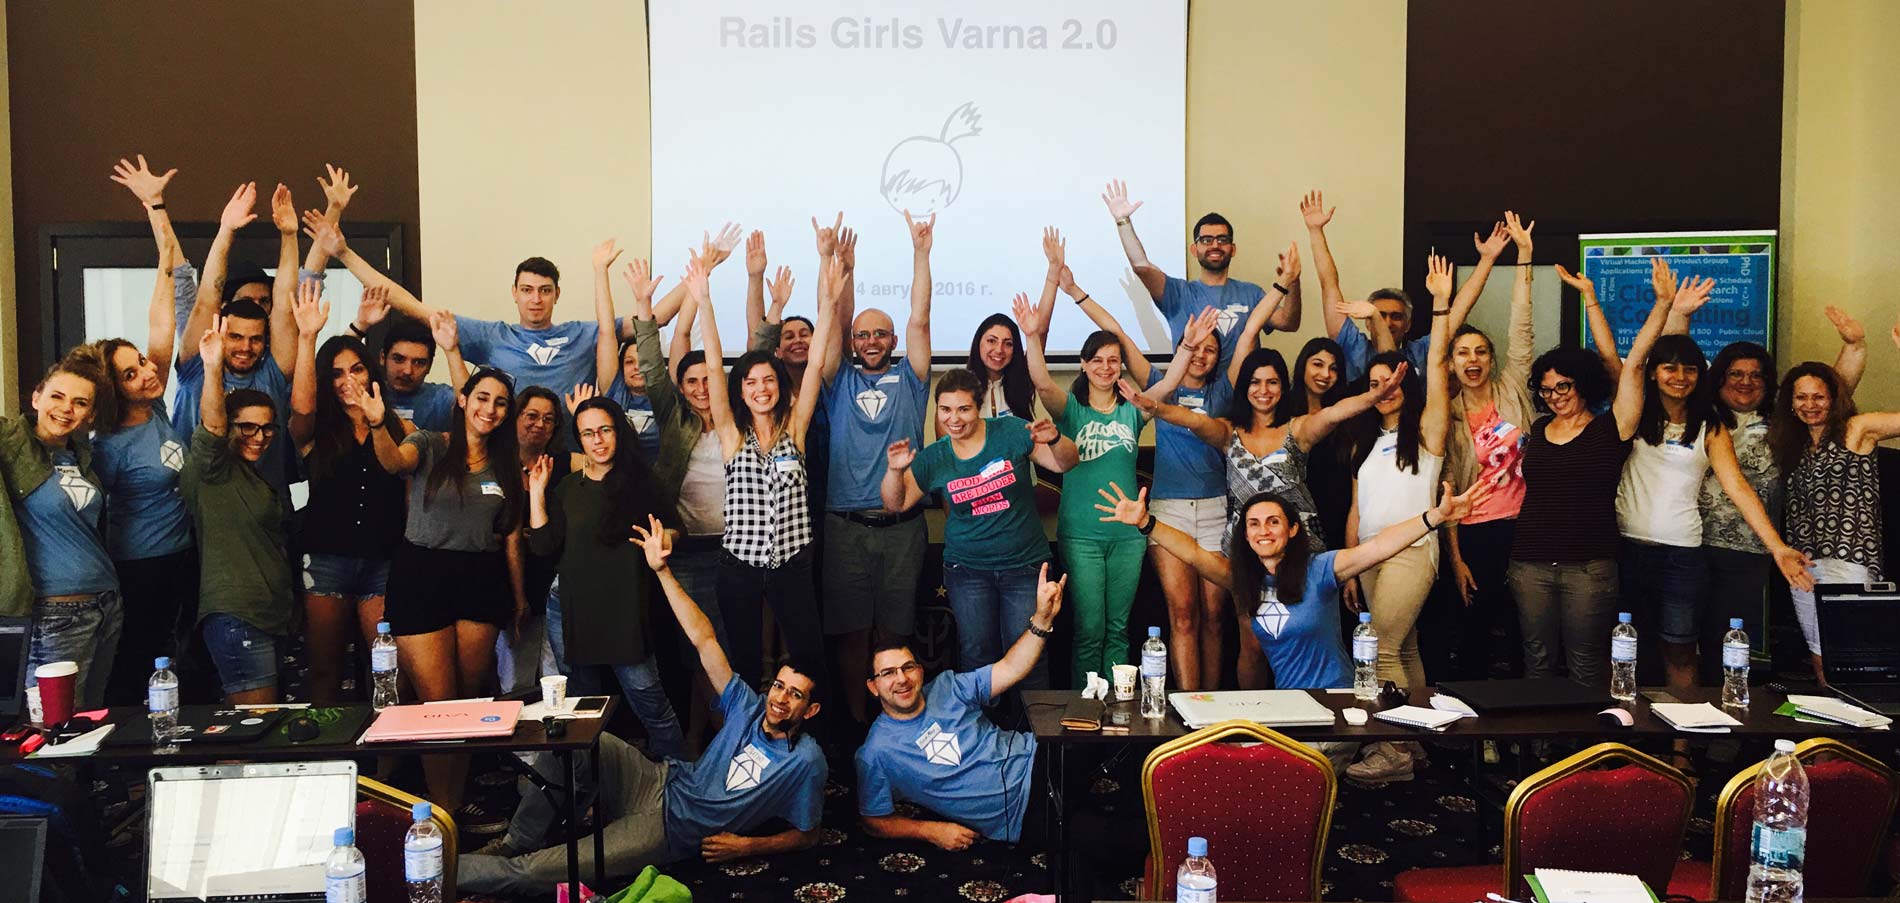 Rails Girls Varna 2.0 August 2016 Group Photo